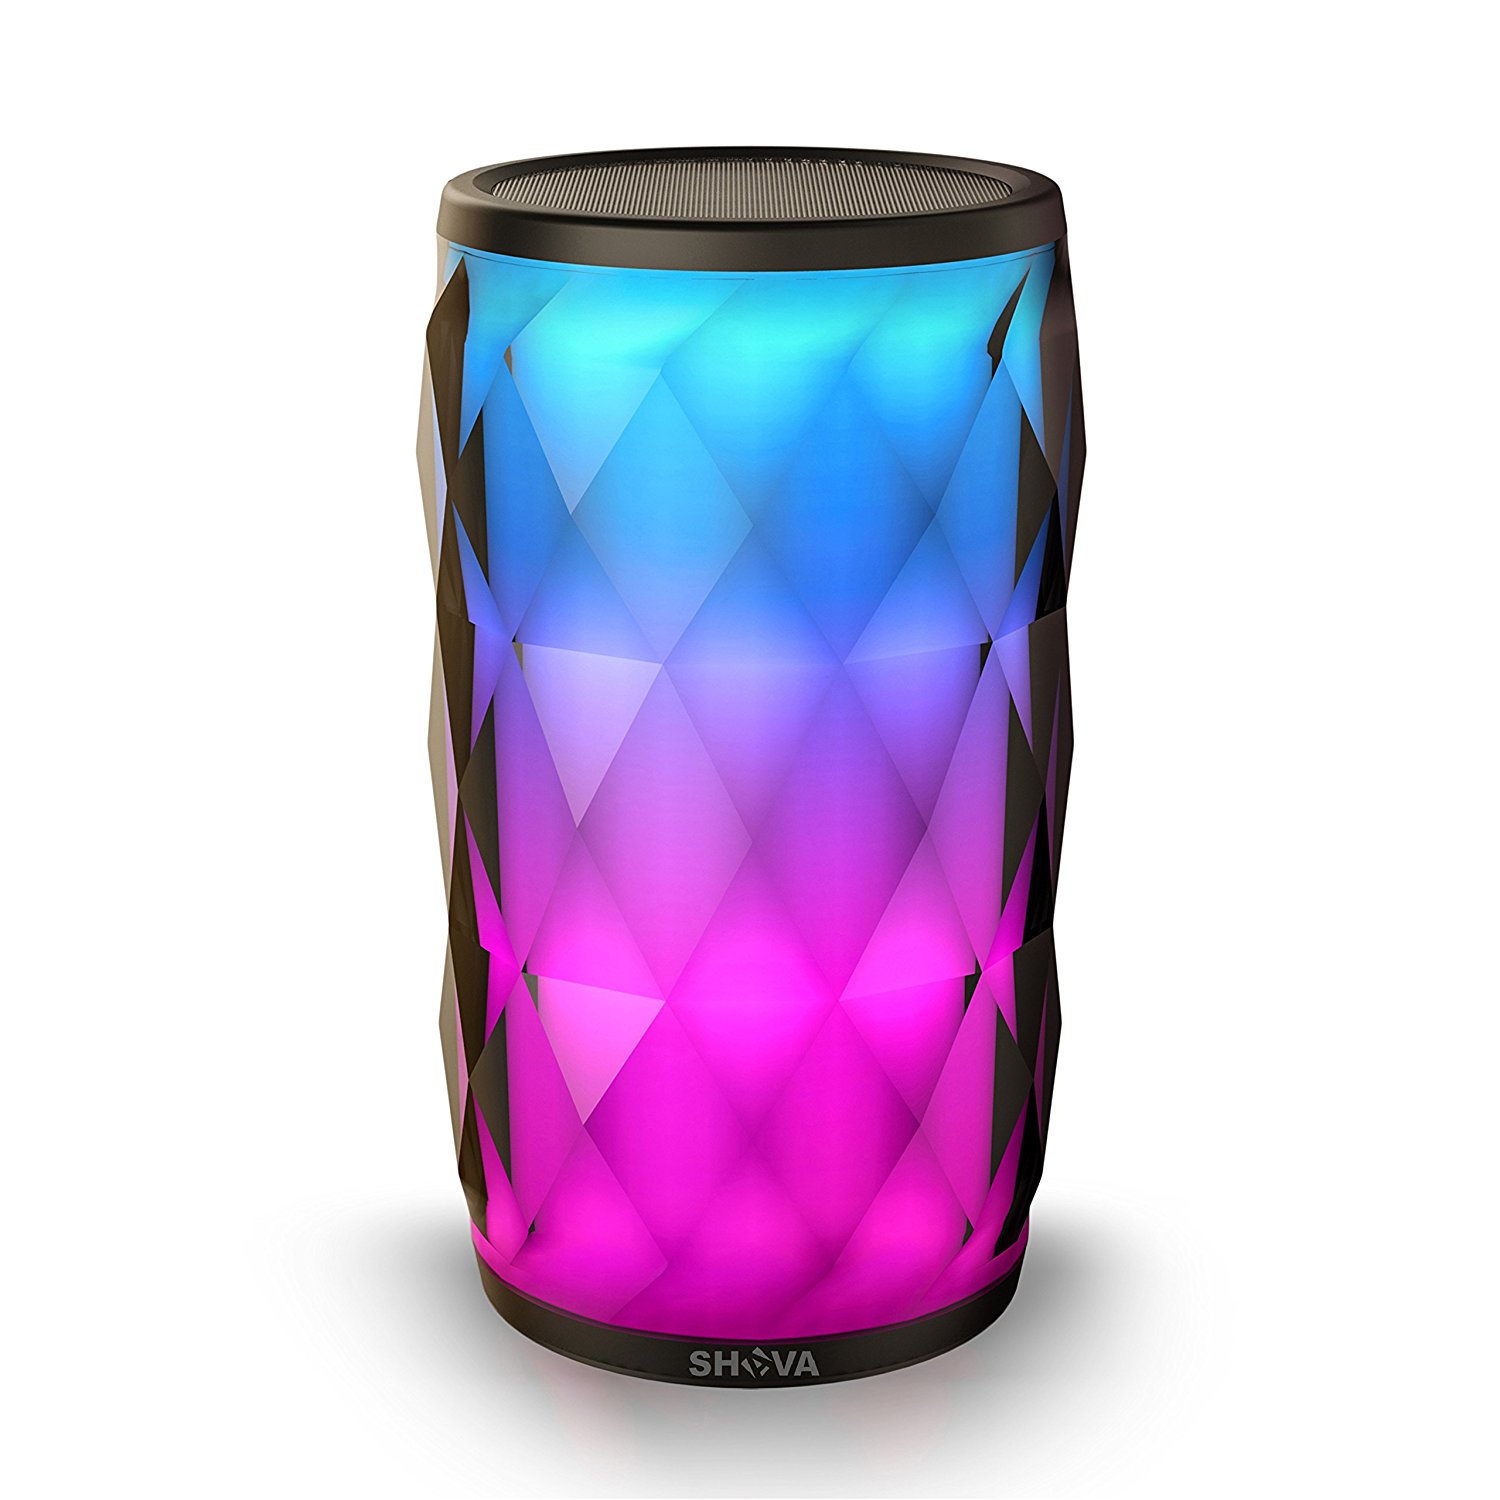 SHAVA Jewel Night Light Bluetooth Speaker Review 2018